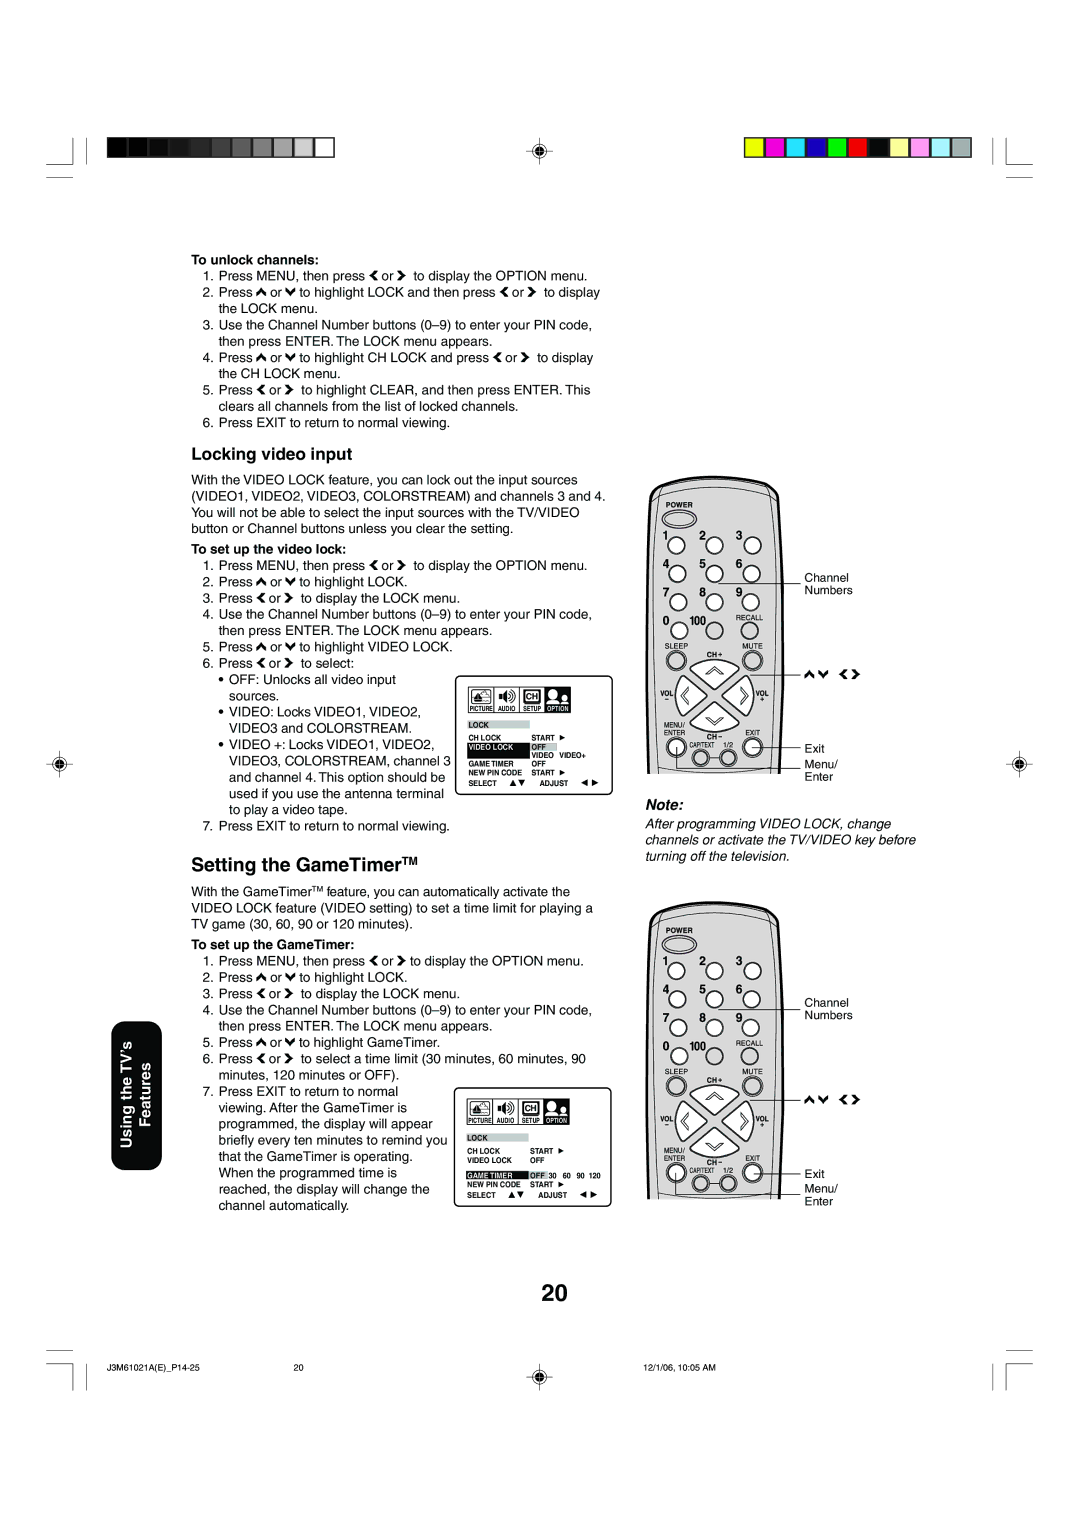 Toshiba 24AF46 appendix Setting the GameTimerTM, Locking video input 